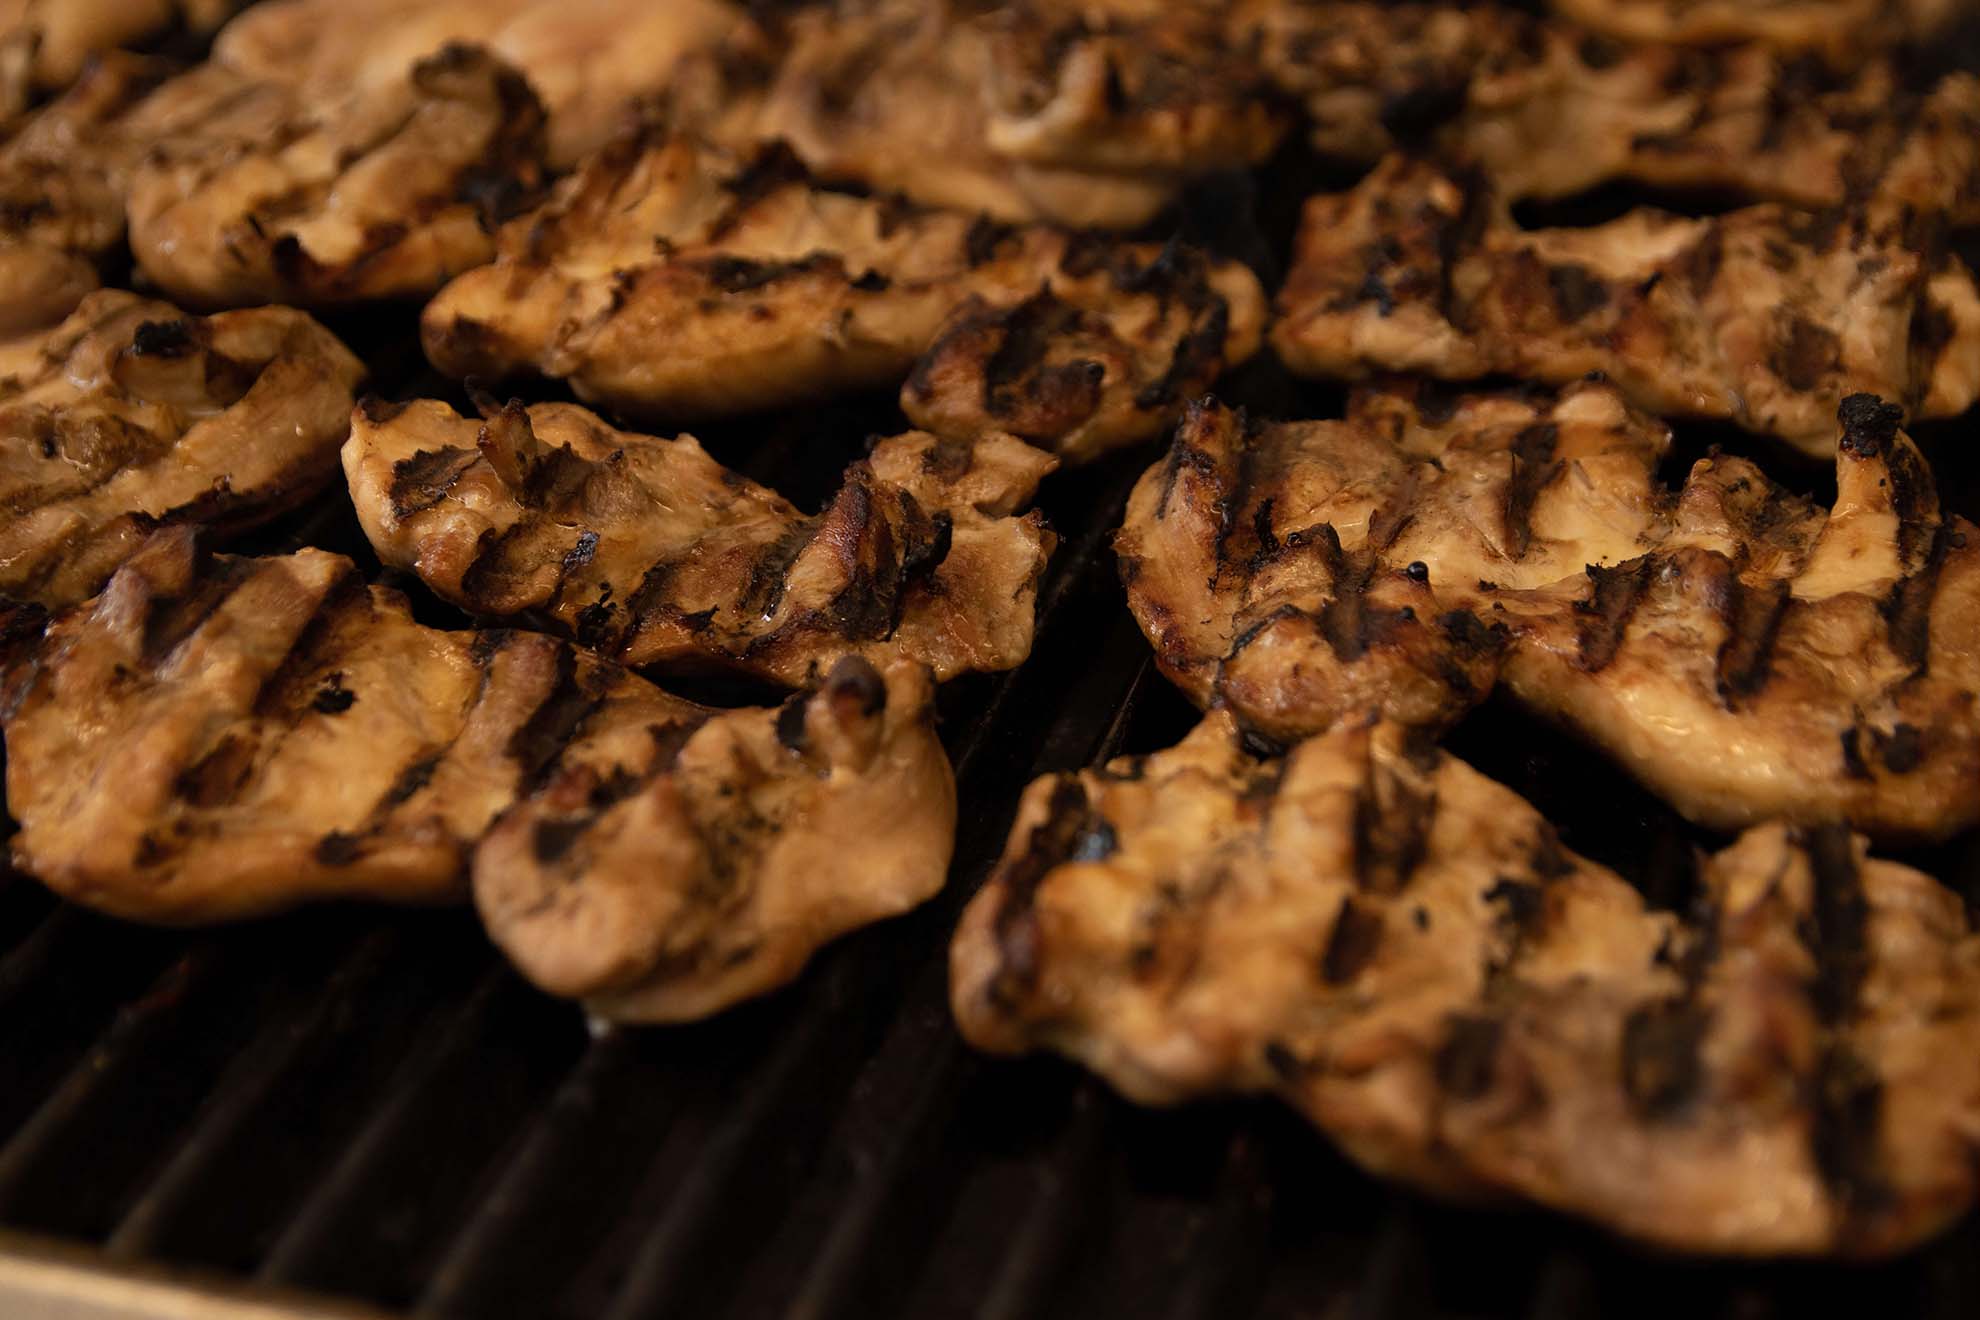 Chicken on grill